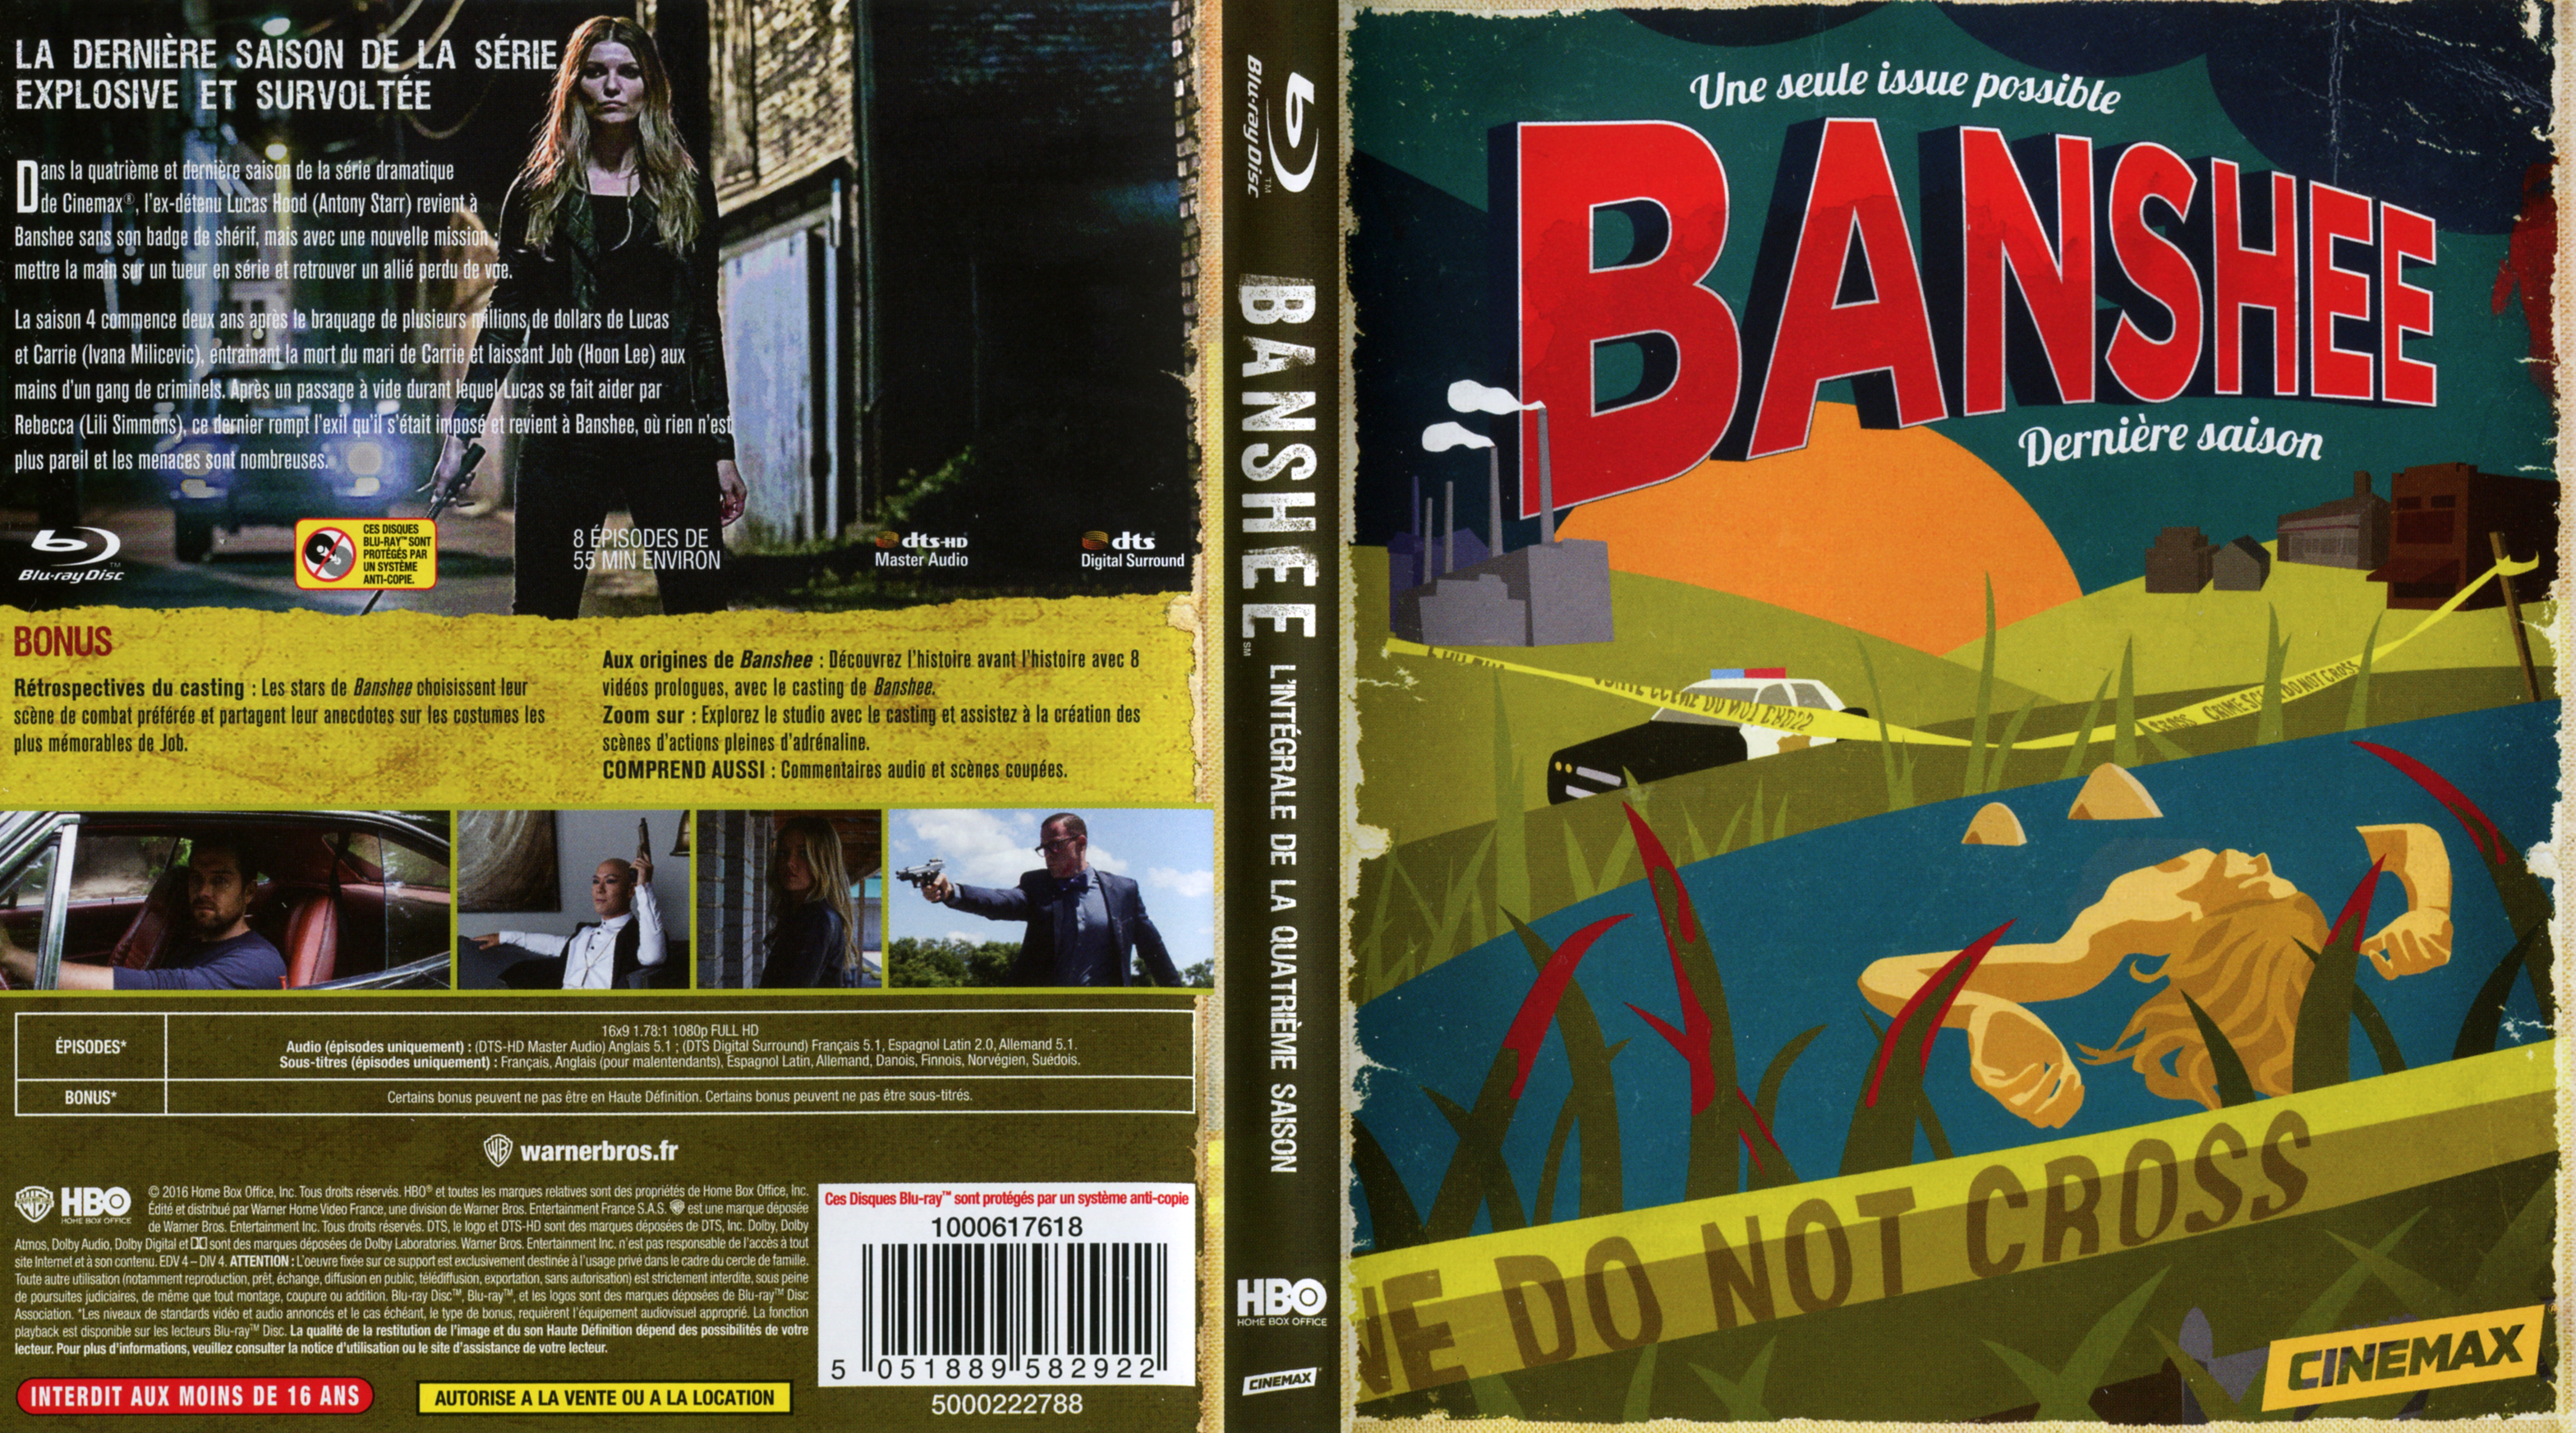 Jaquette DVD Banshee saison 4 (BLU-RAY)